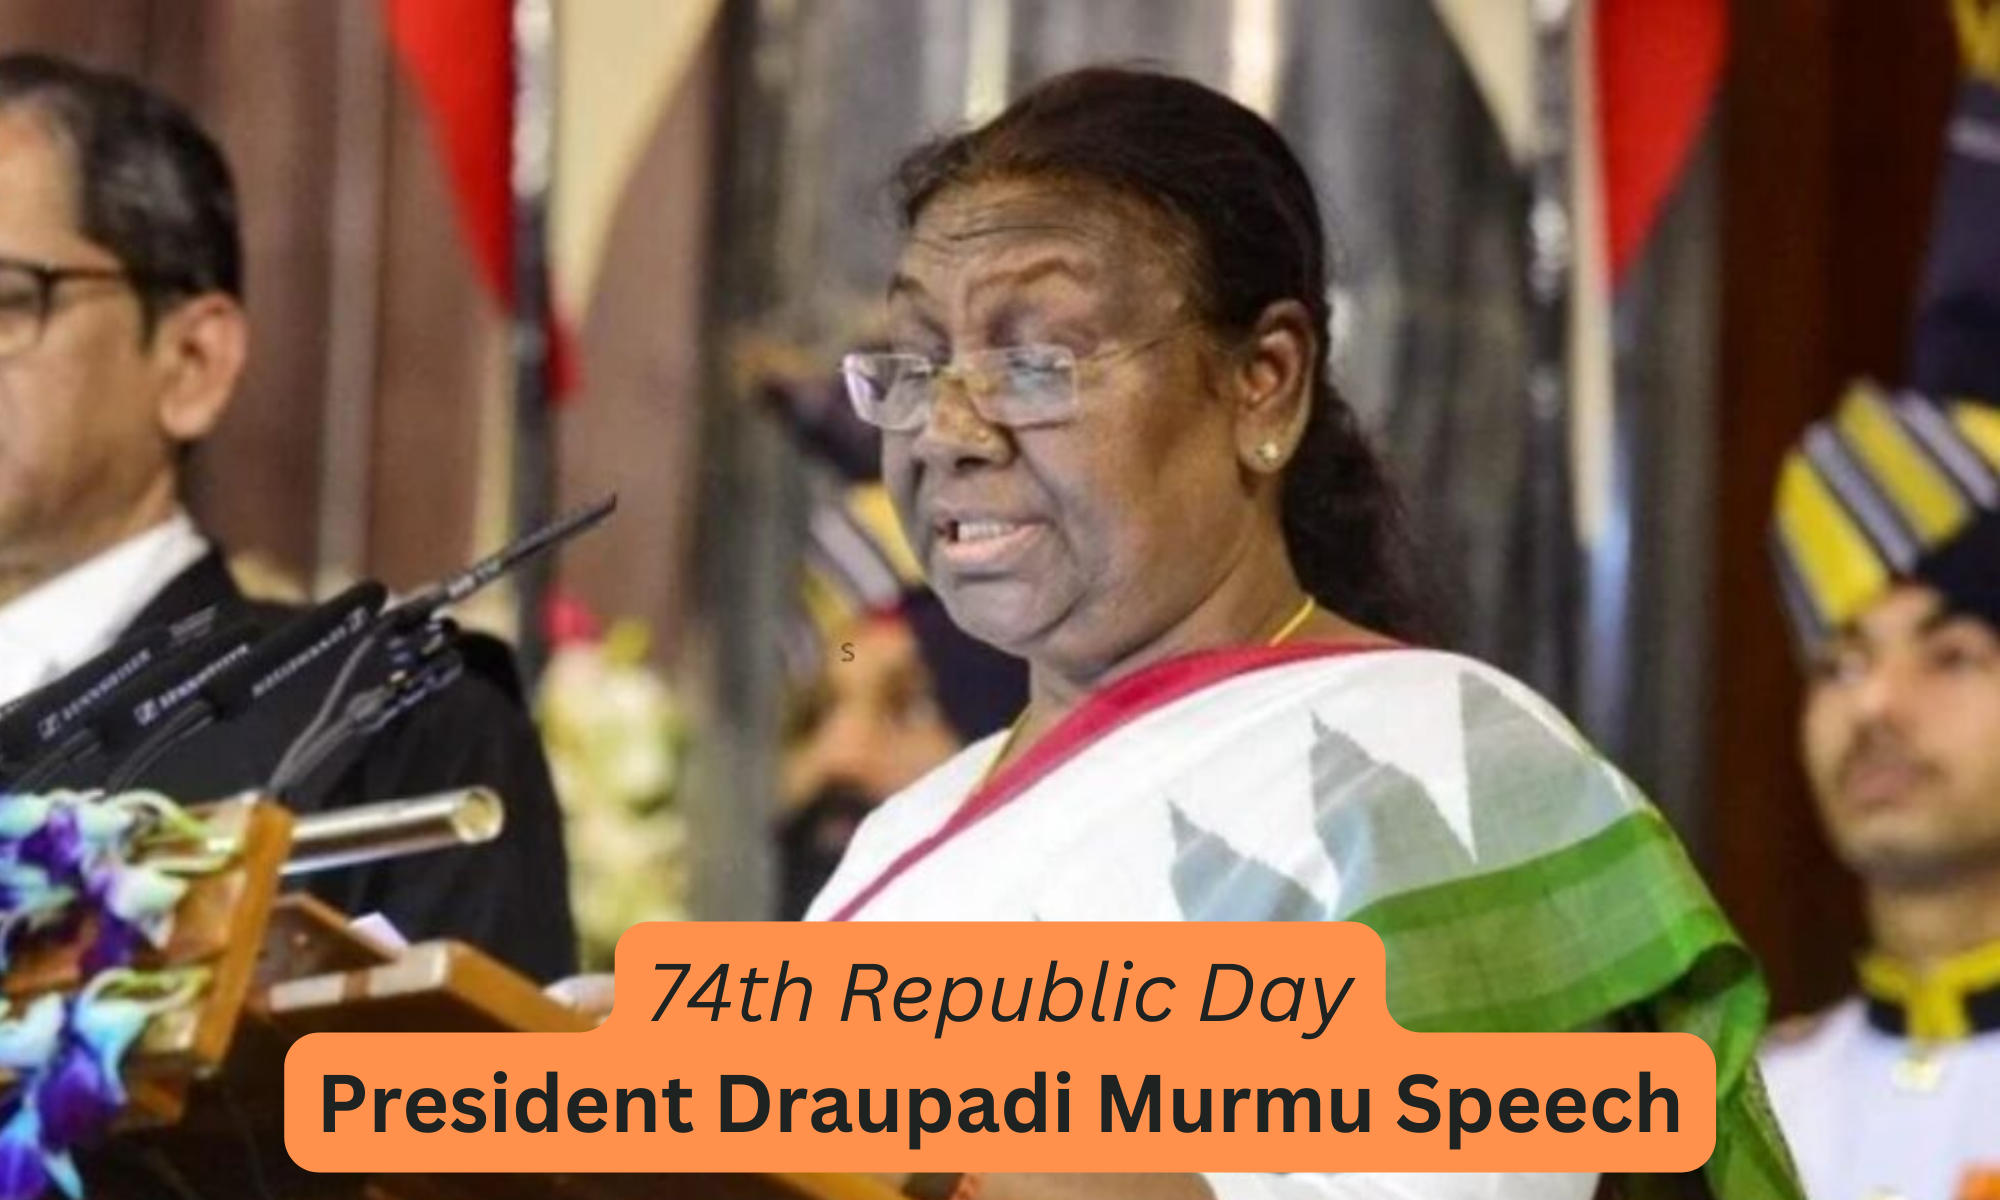 President Draupadi Murmu Speech Highlights on 74th Republic Day